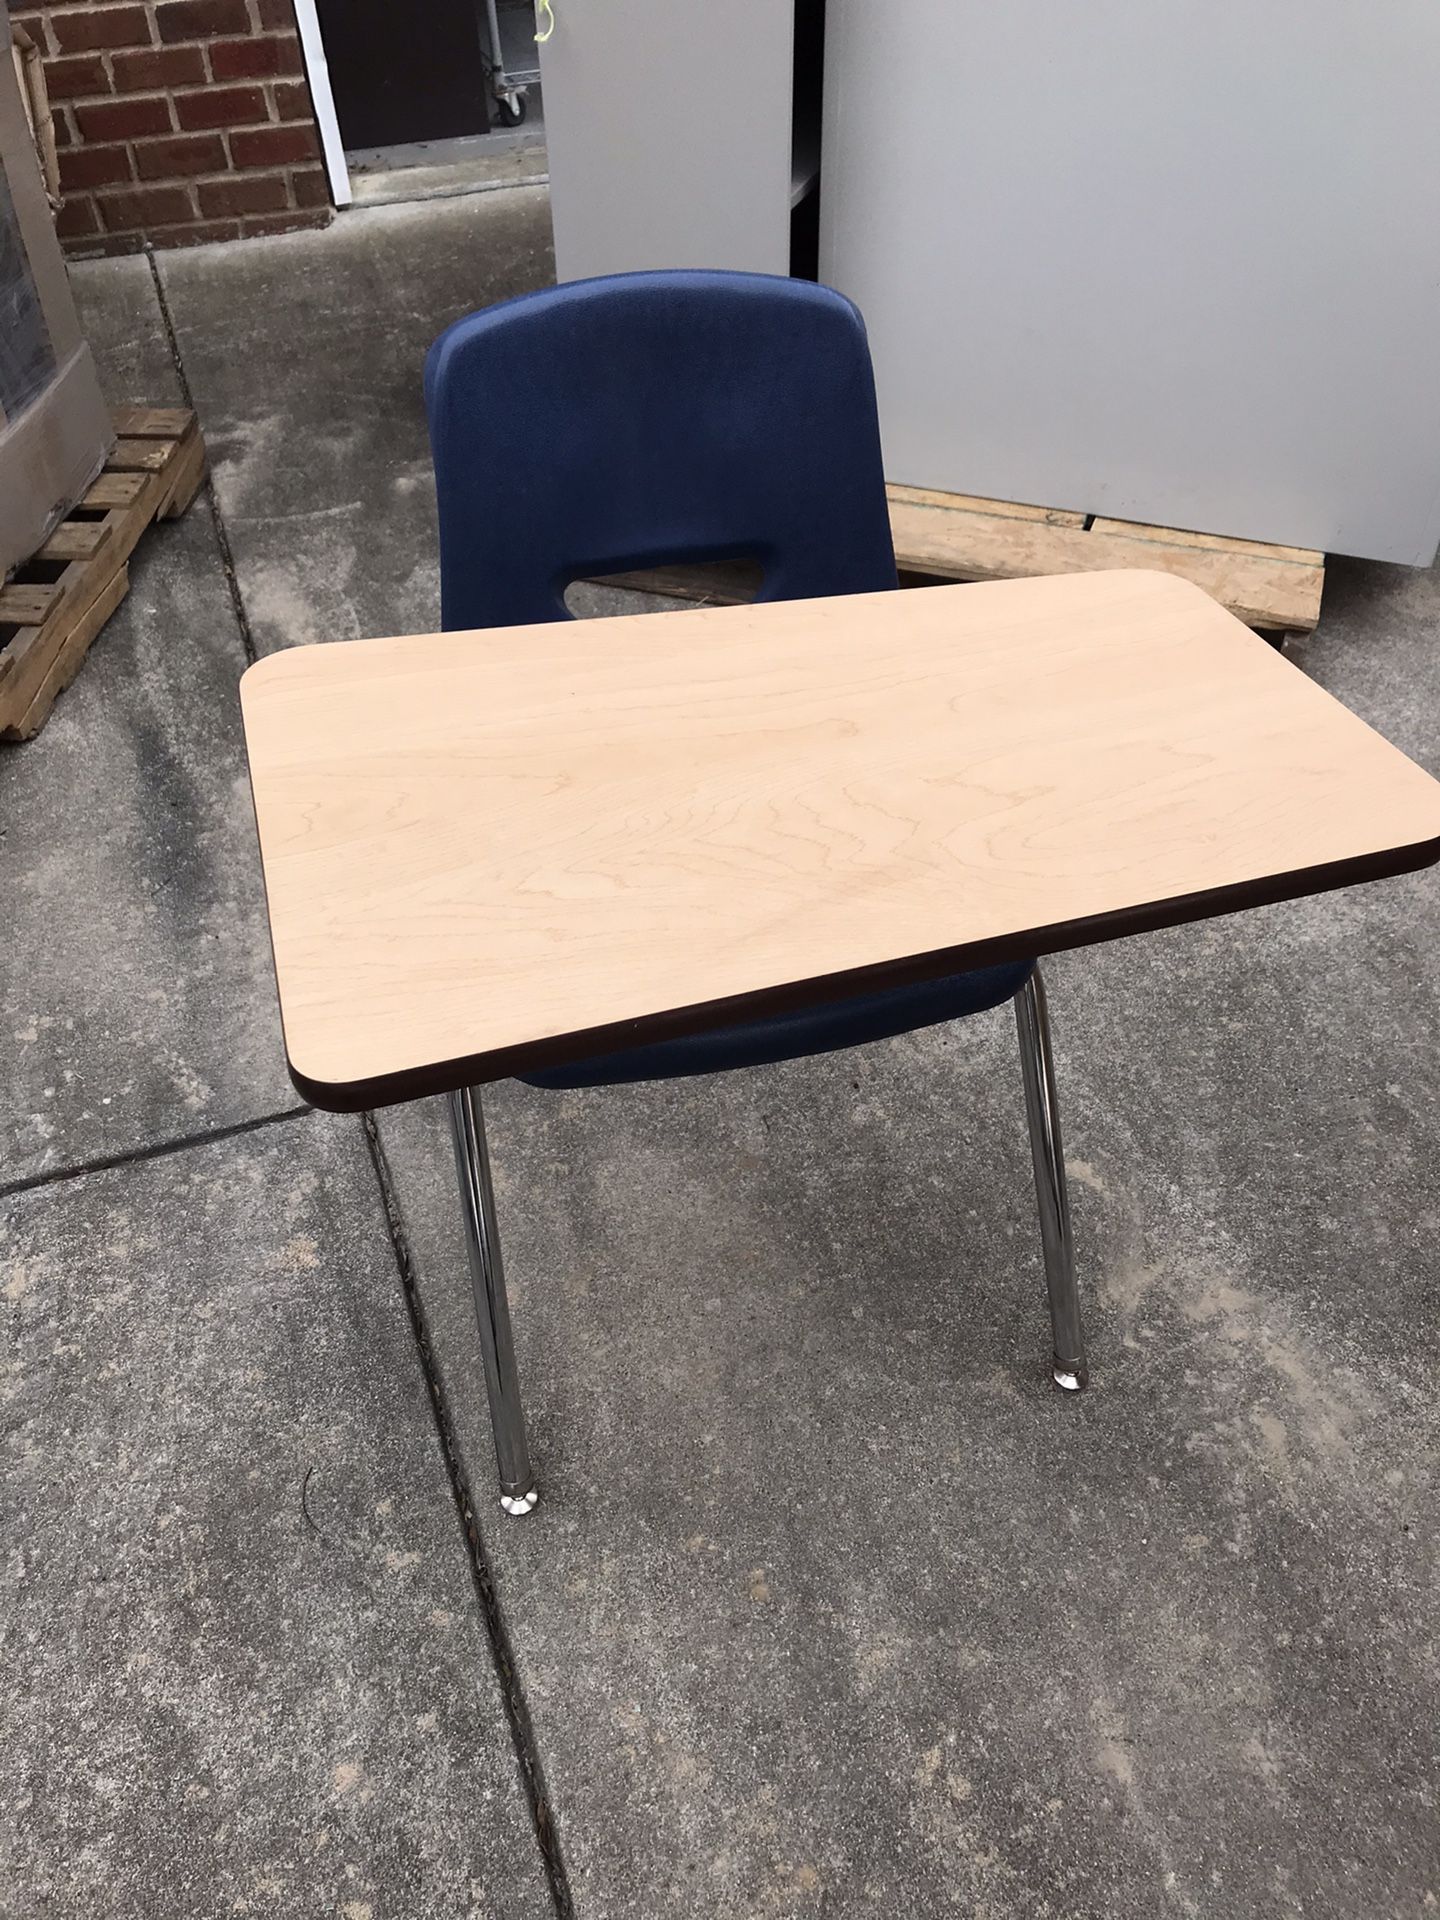 New school desks in box, have (3)